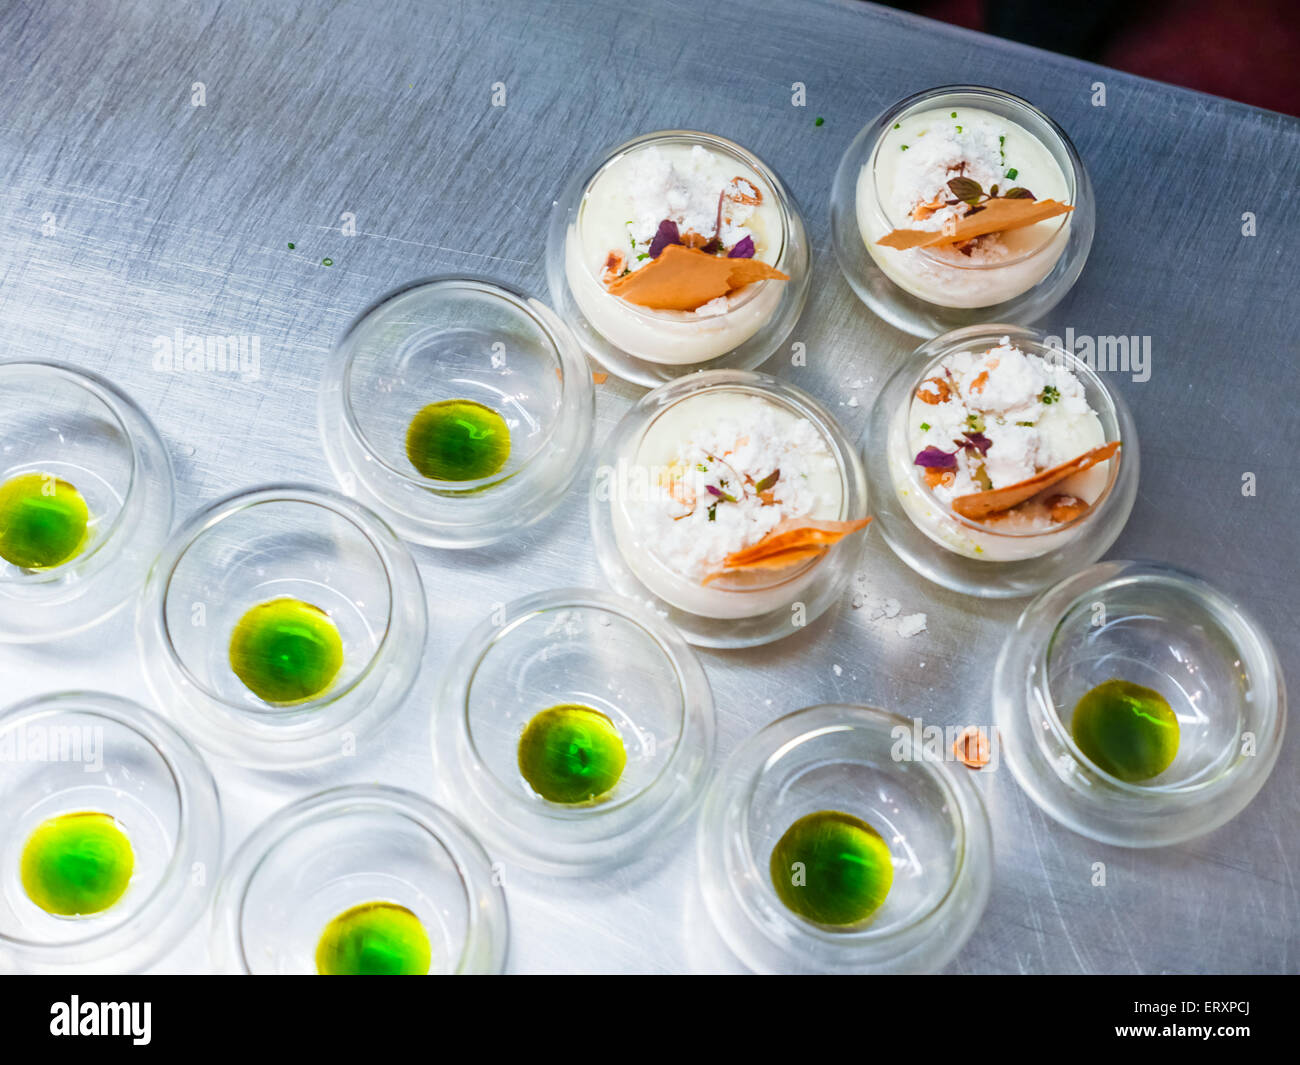 Amuse Bouche Artichoke Foam Desserts on a Metal Kitchen Table Stock Photo